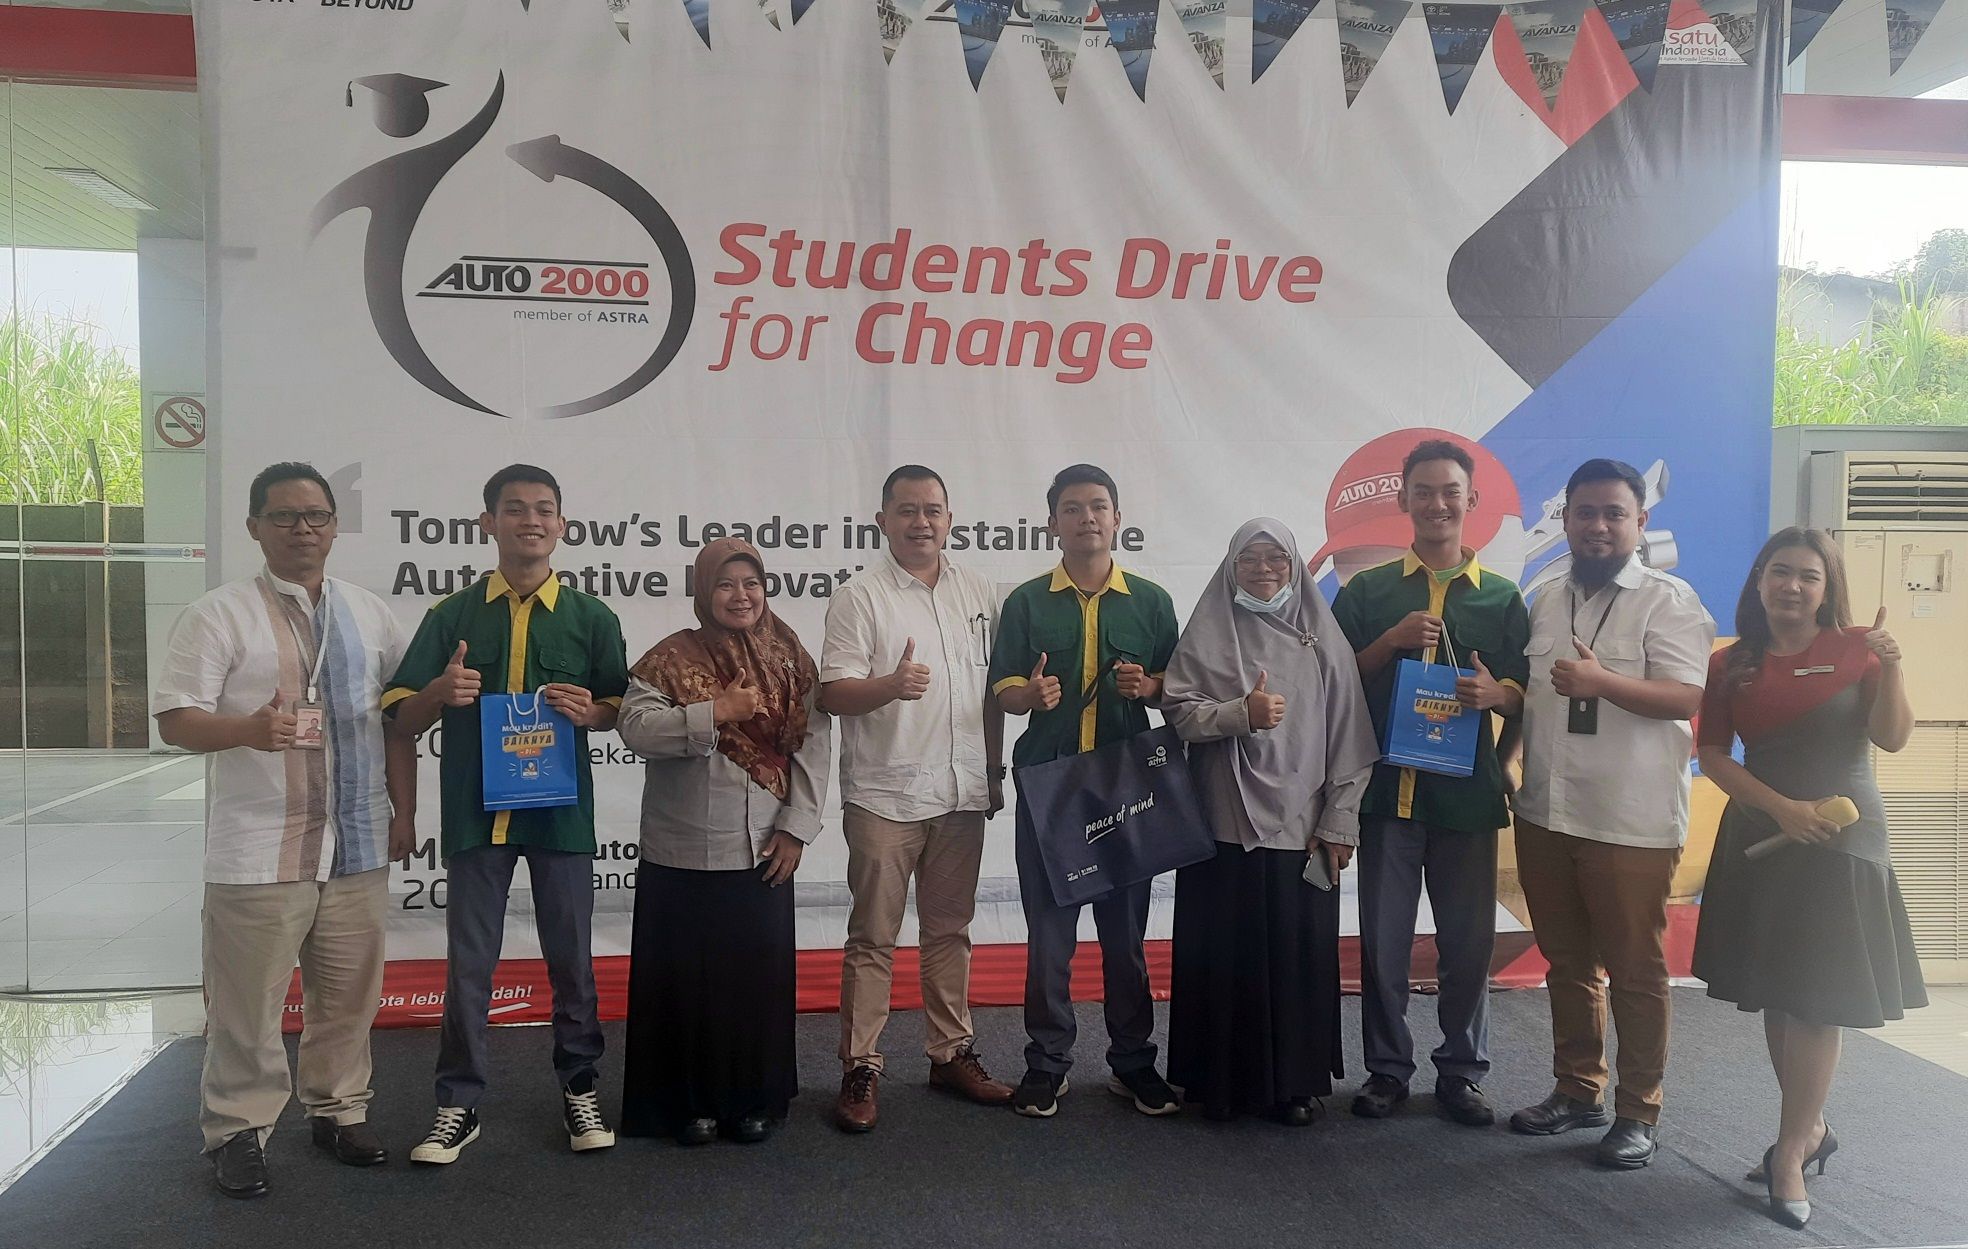 Siswa dan guru pendamping SMKN 6 Bandung bersama manajemen Auto2000 Suci Bandung menuntaskan sesi event Student Drive for Change.*/   